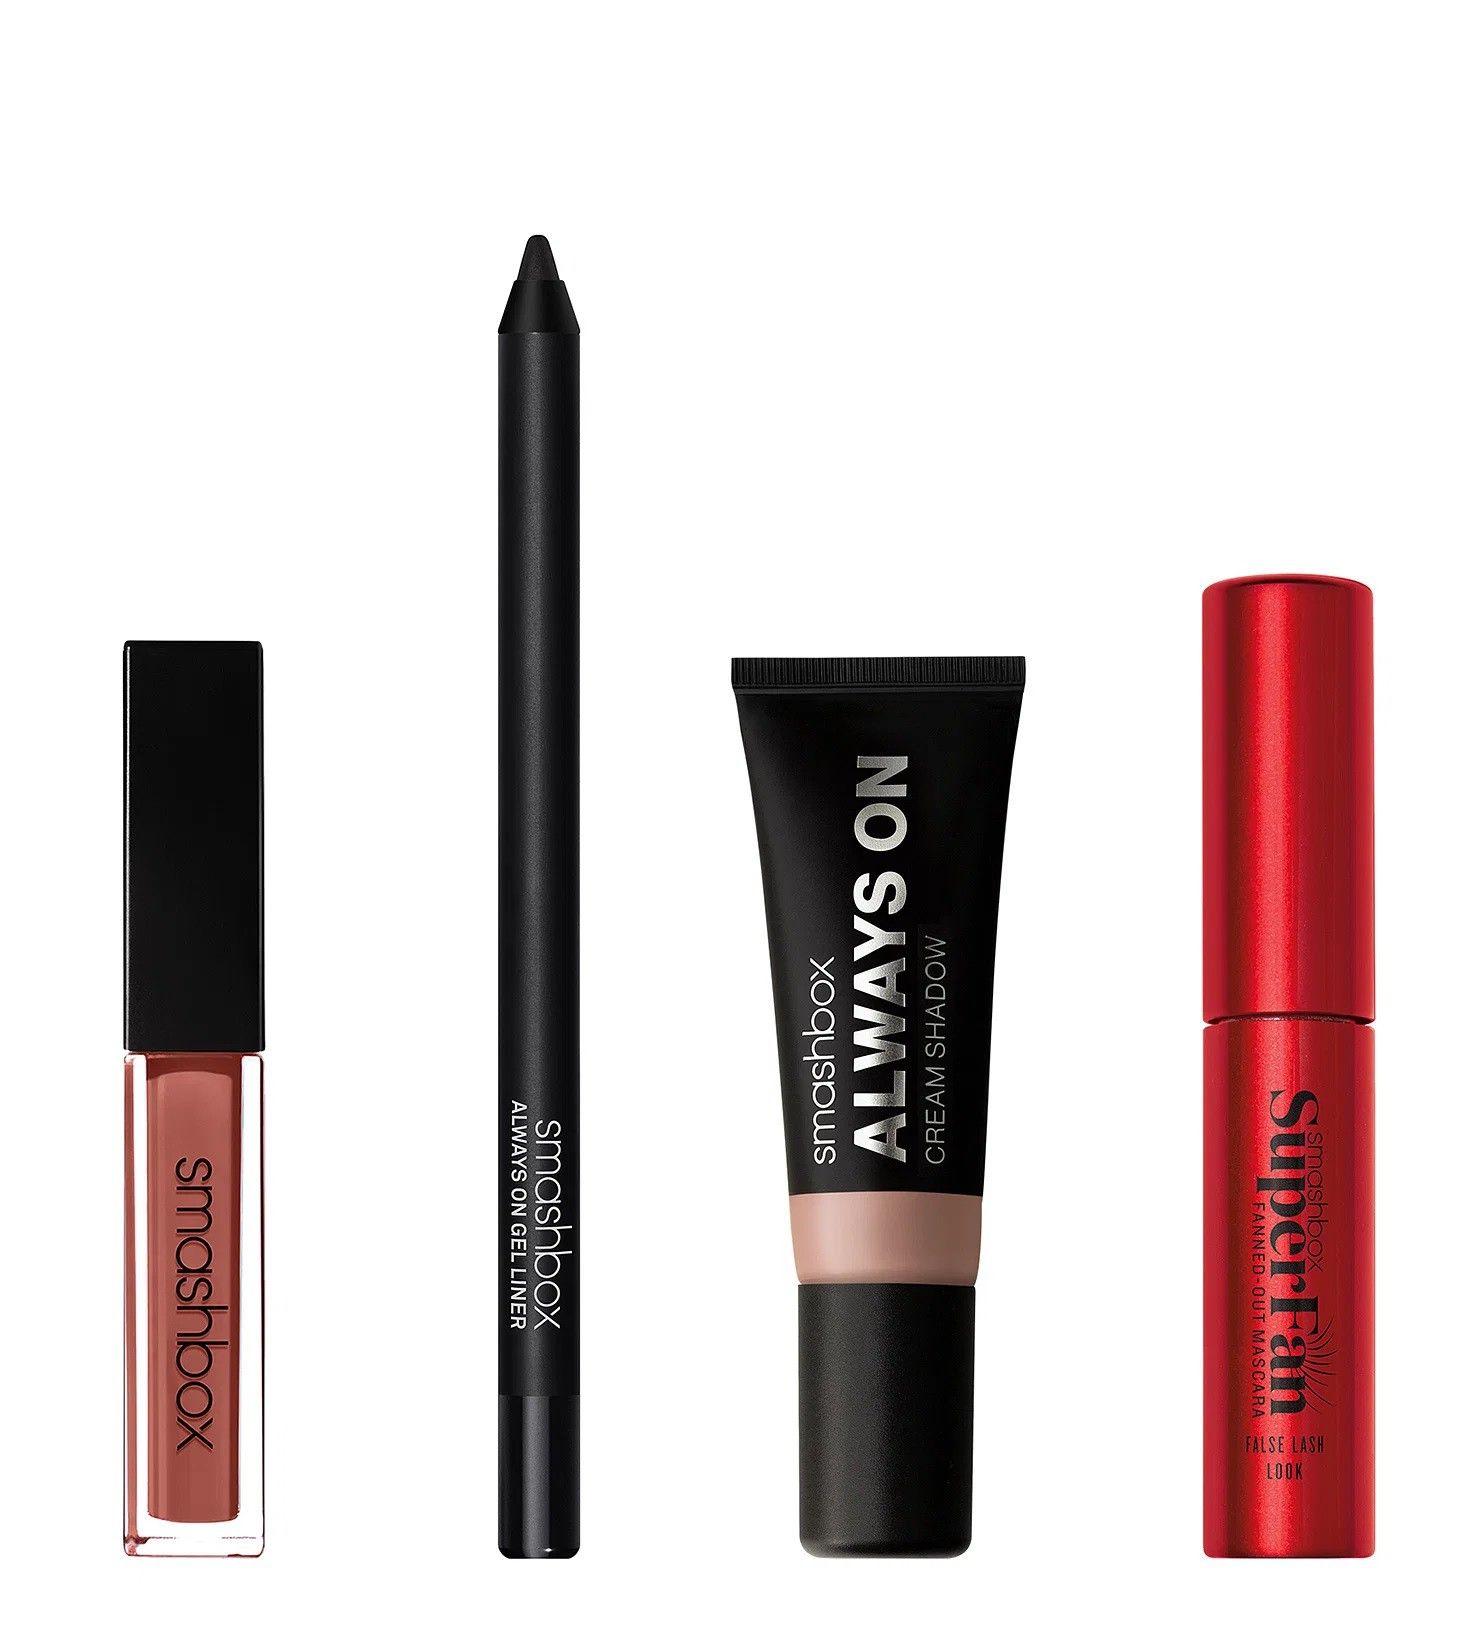 Smashbox SET Up All Night Makeup Essentials